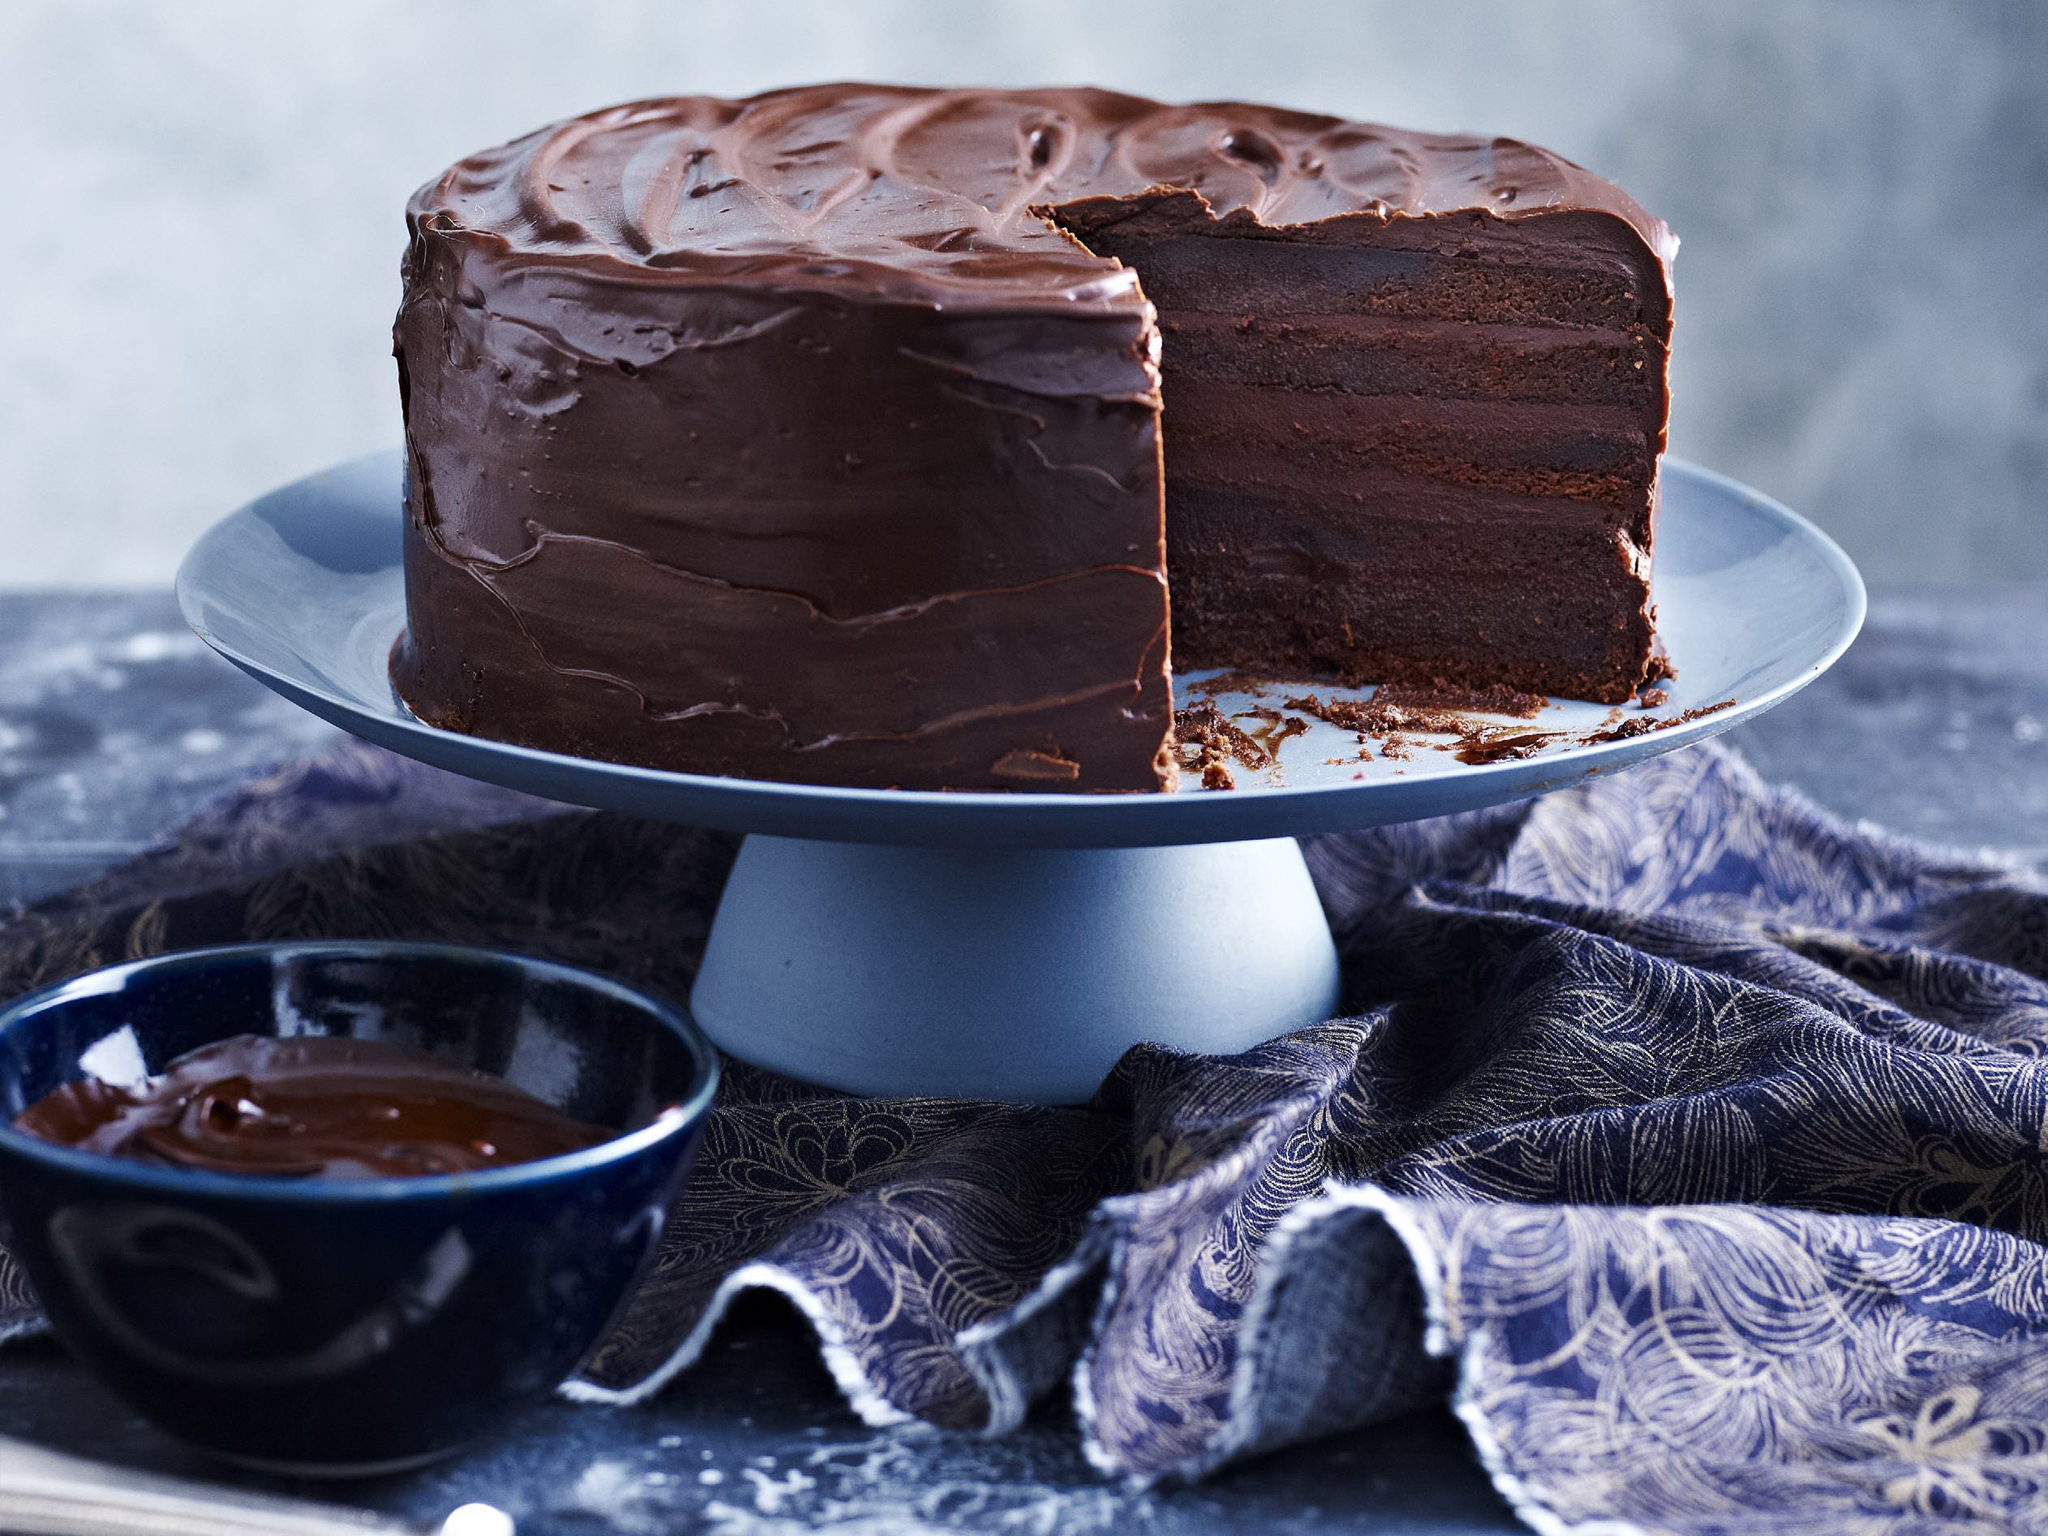 Six-layer chocolate cake